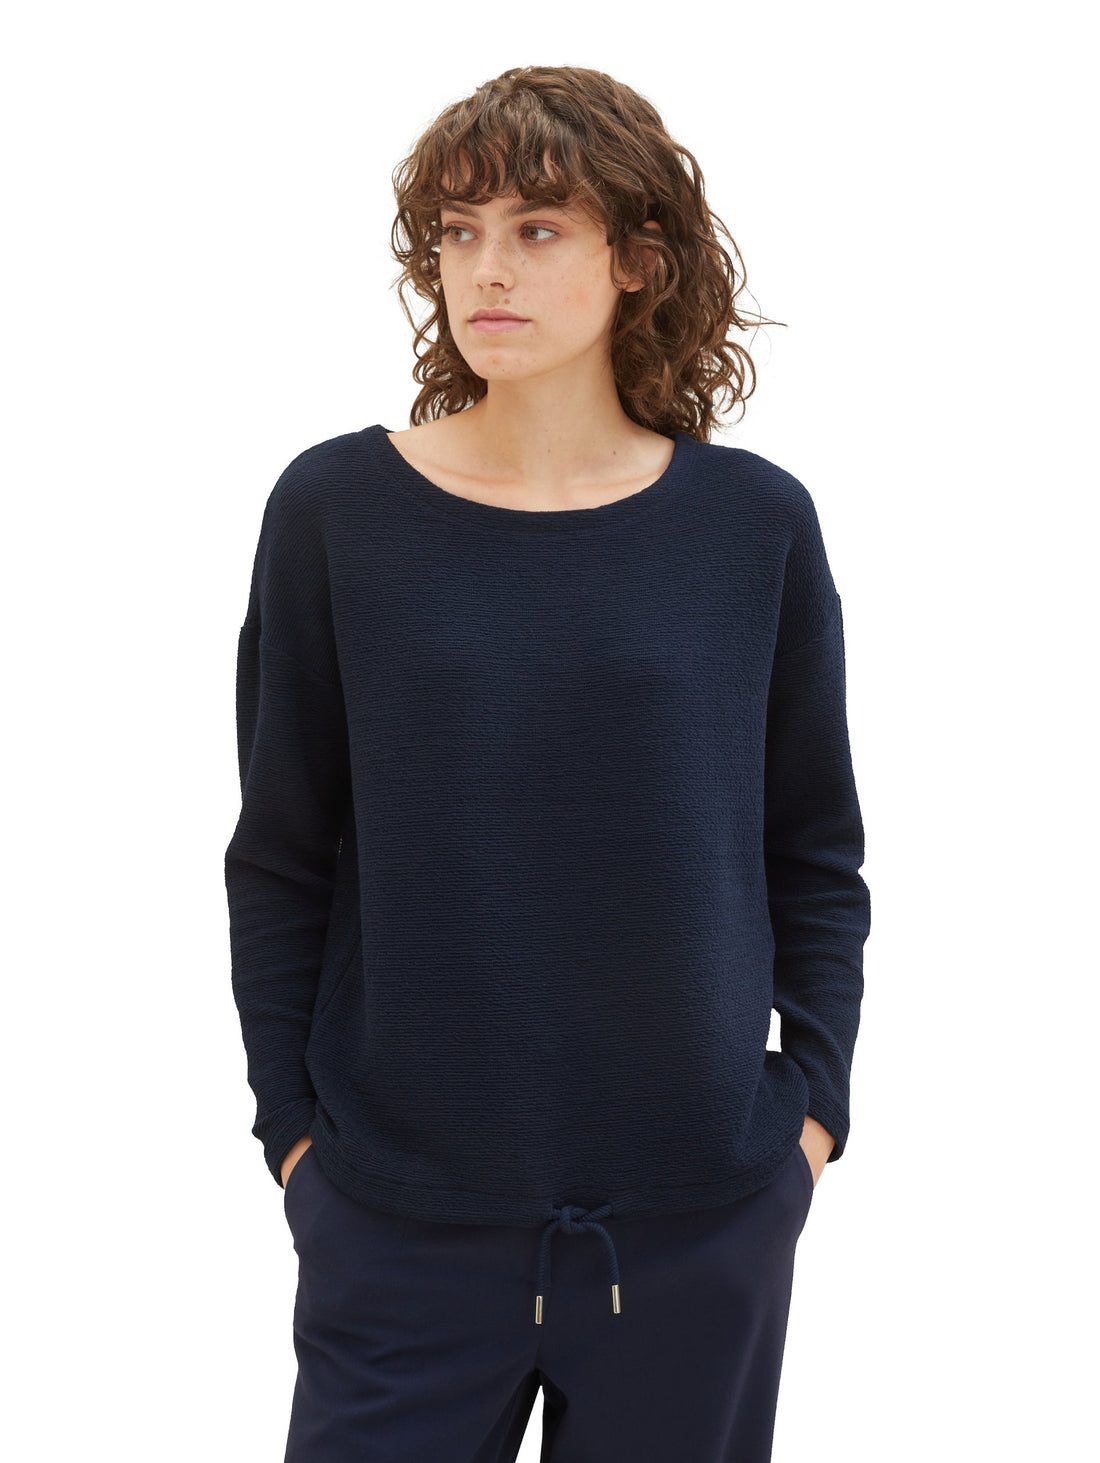 Long Sleeve Sweatshirt With Adjustable Hem_1038177_10668_05